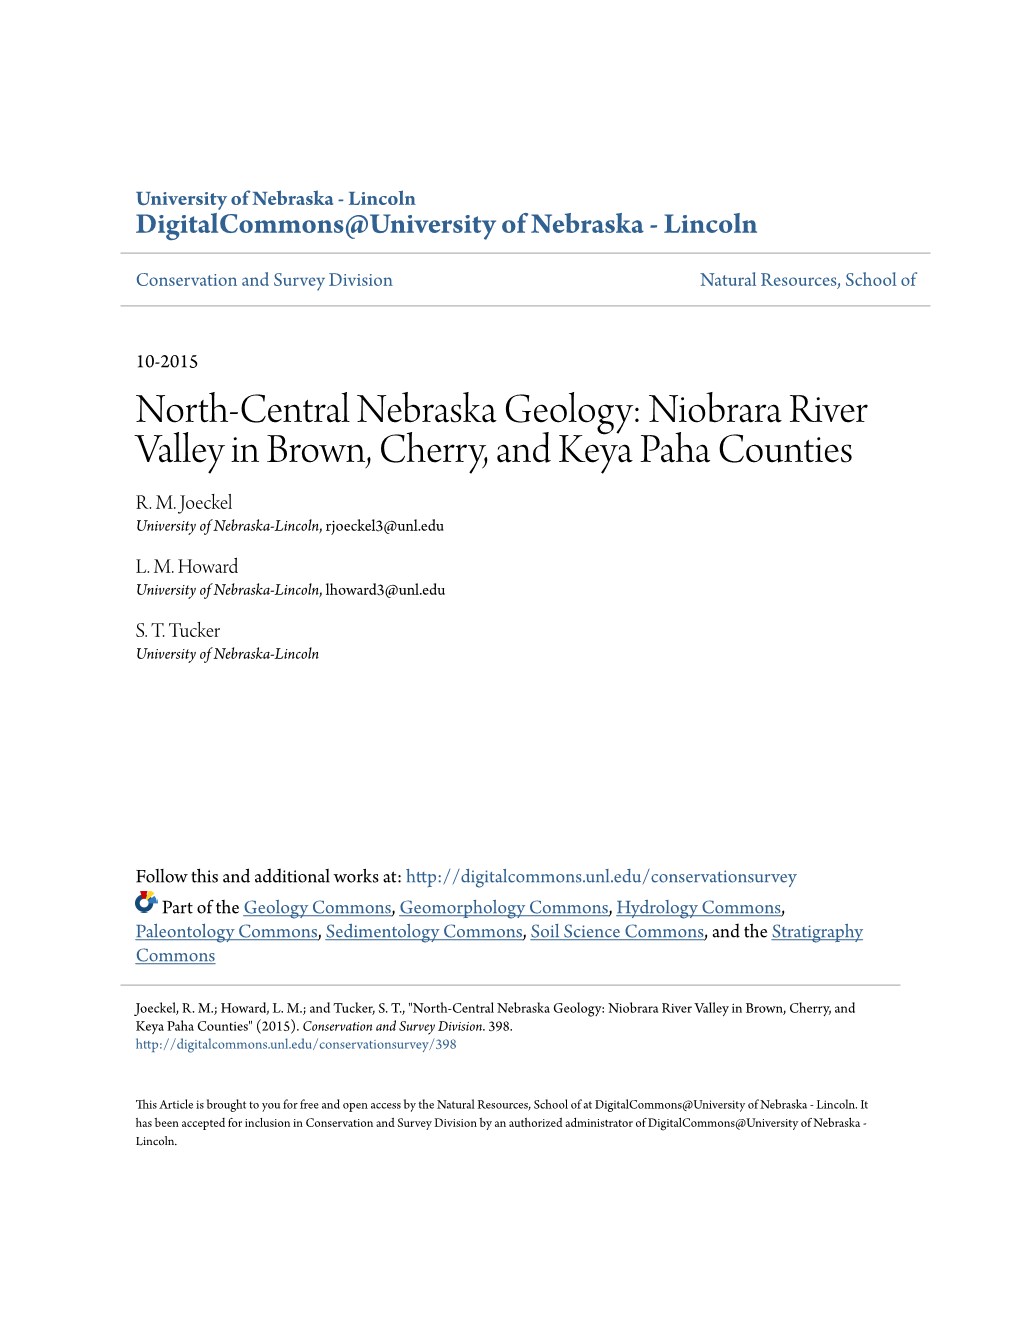 North-Central Nebraska Geology: Niobrara River Valley in Brown, Cherry, and Keya Paha Counties R